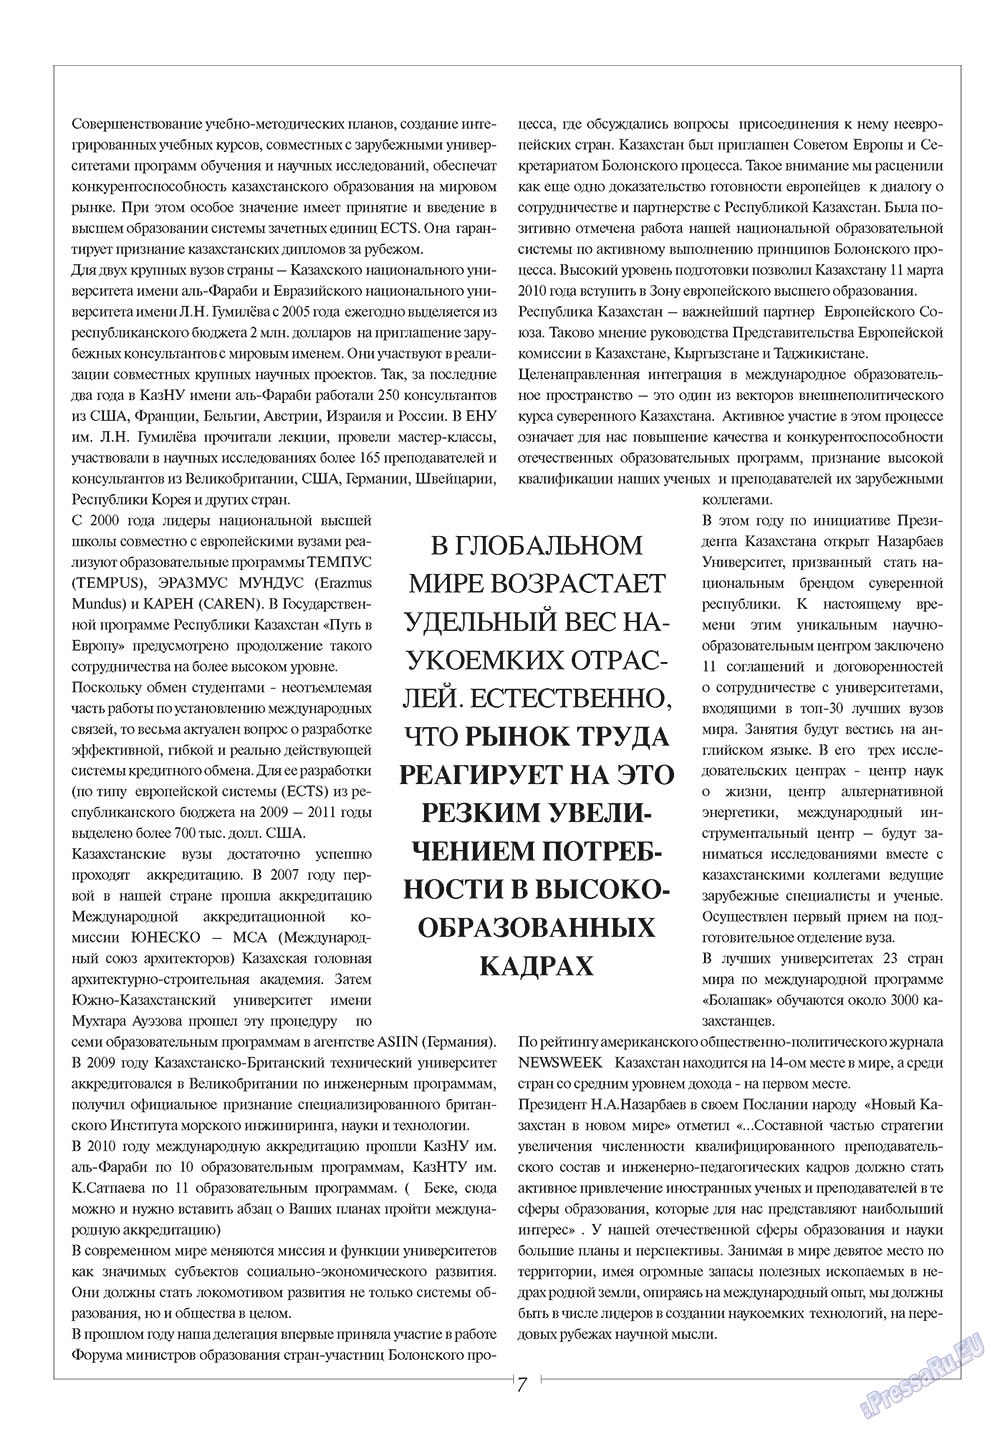 Европейский меридиан, журнал. 2010 №4 стр.7